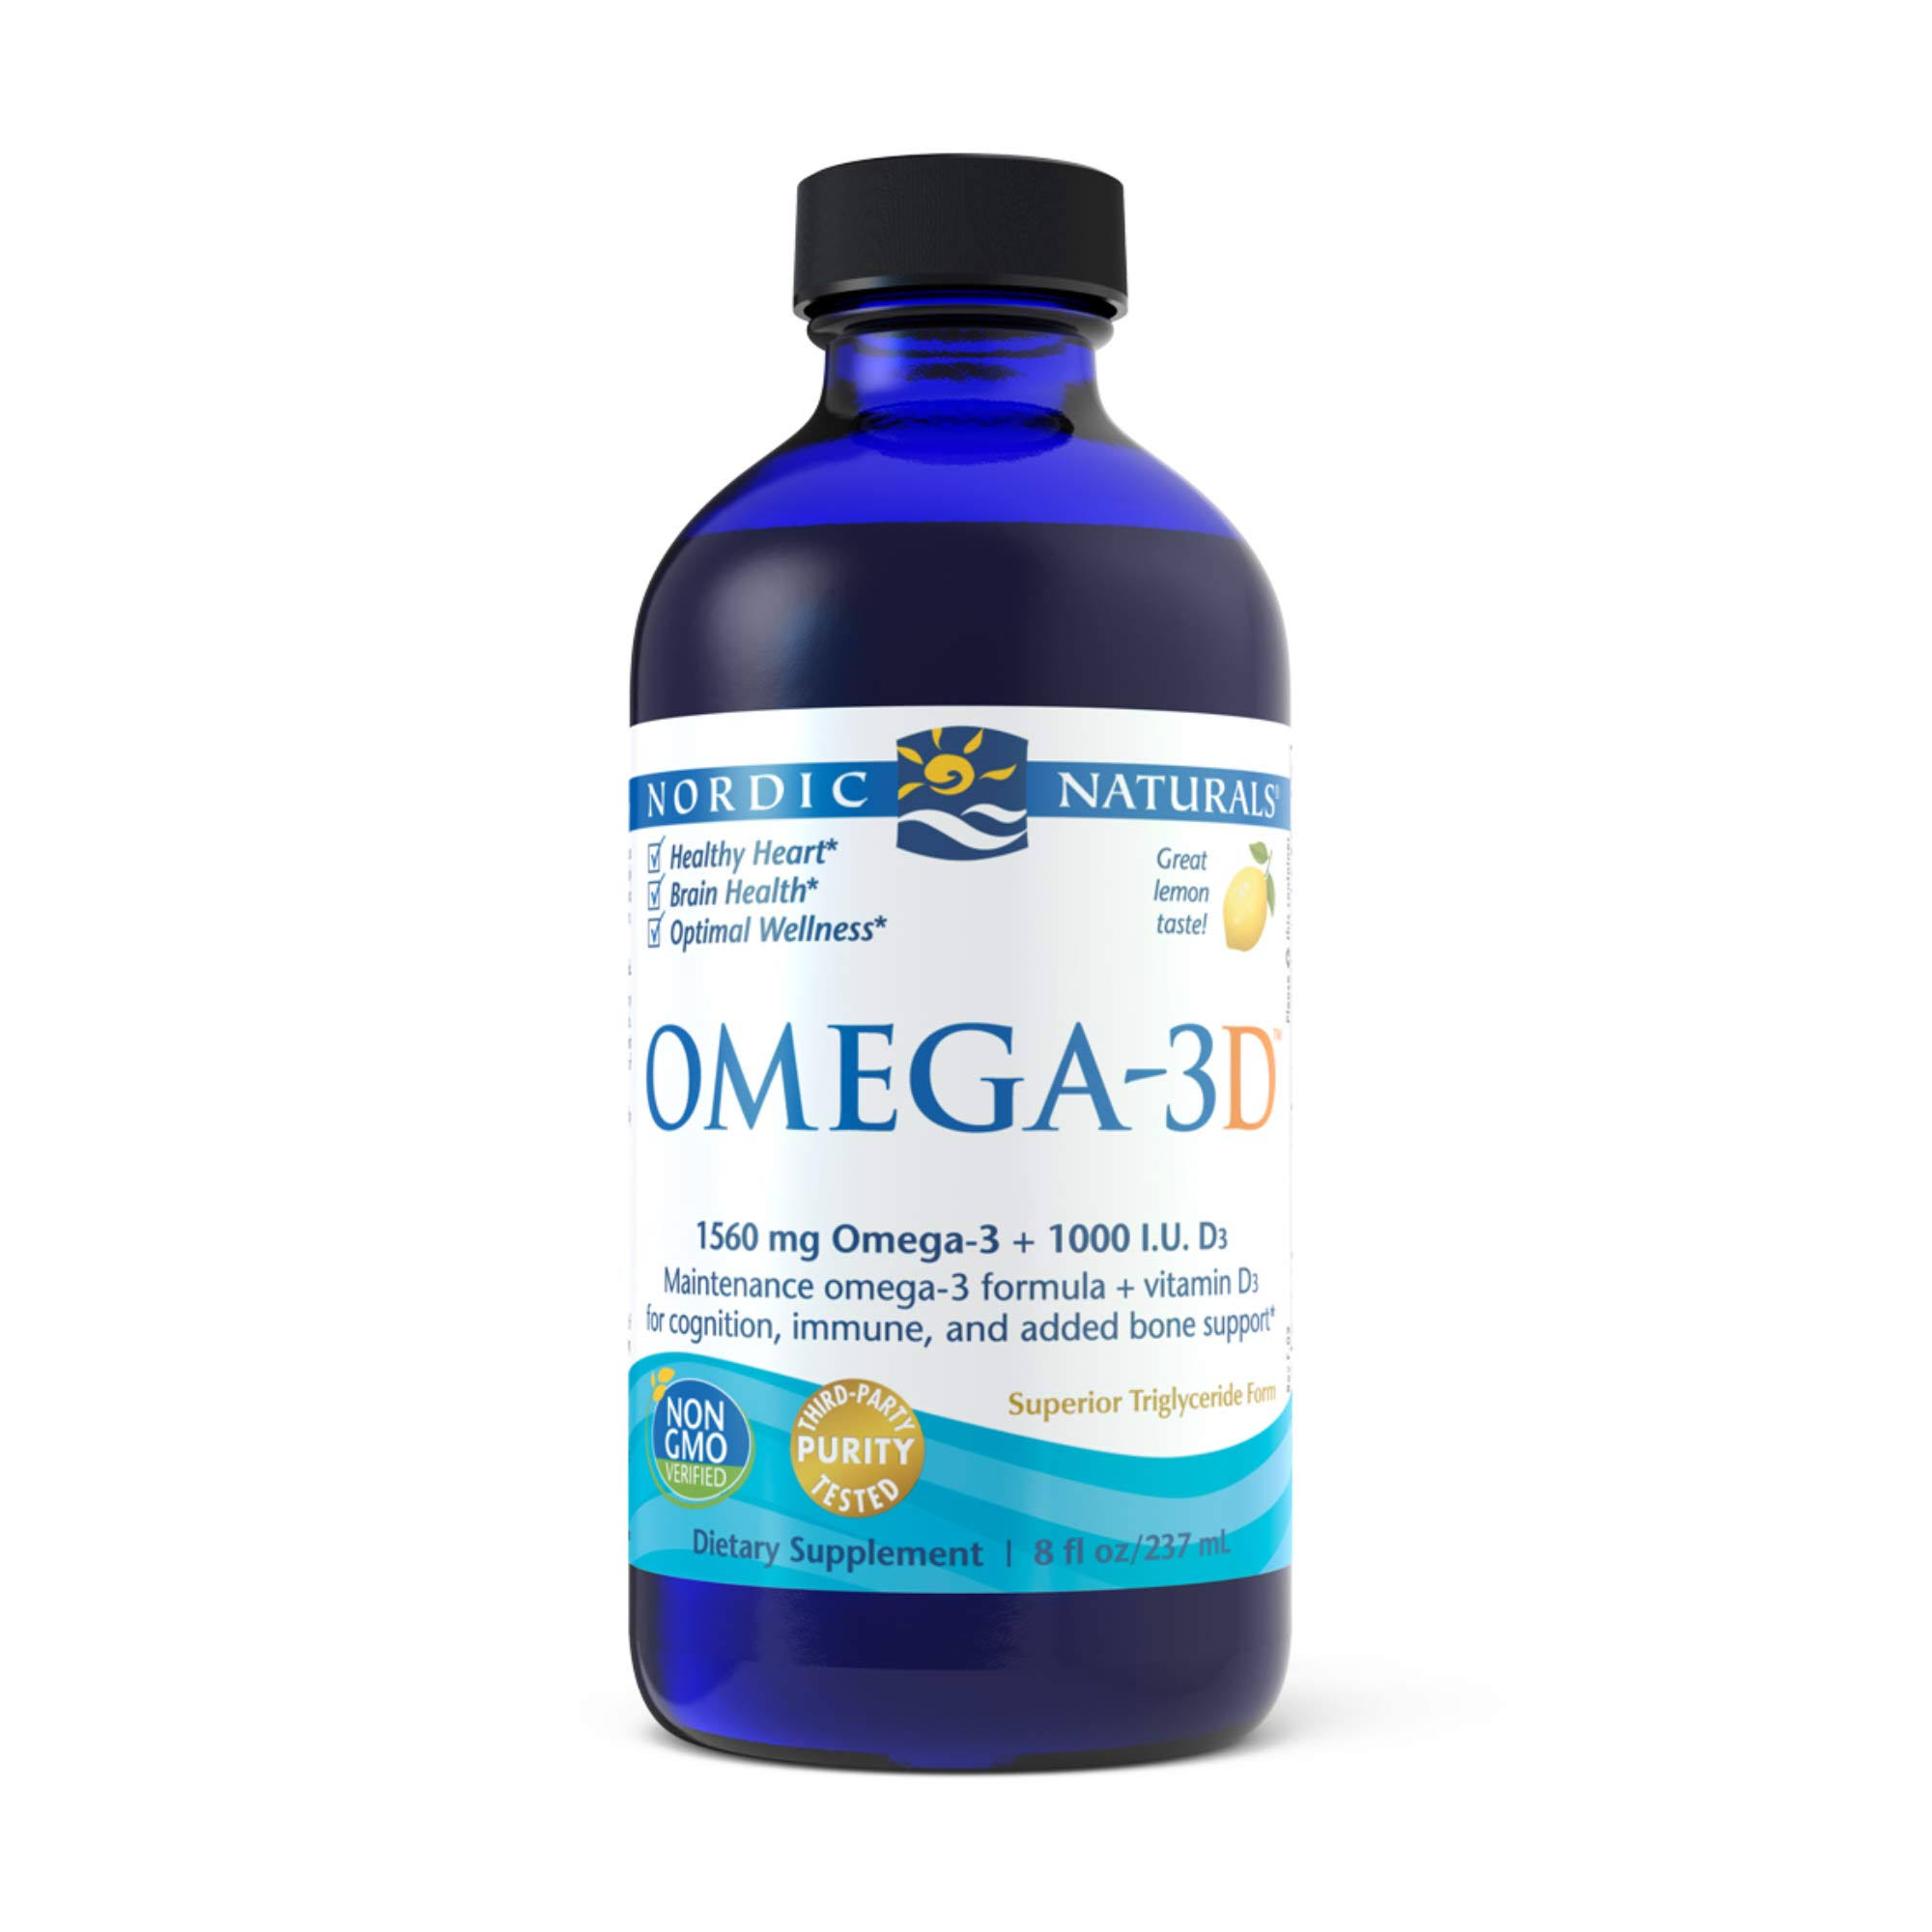 Nordic Naturals Omega-3D Supplement - 1000mg, Lemon, 8oz